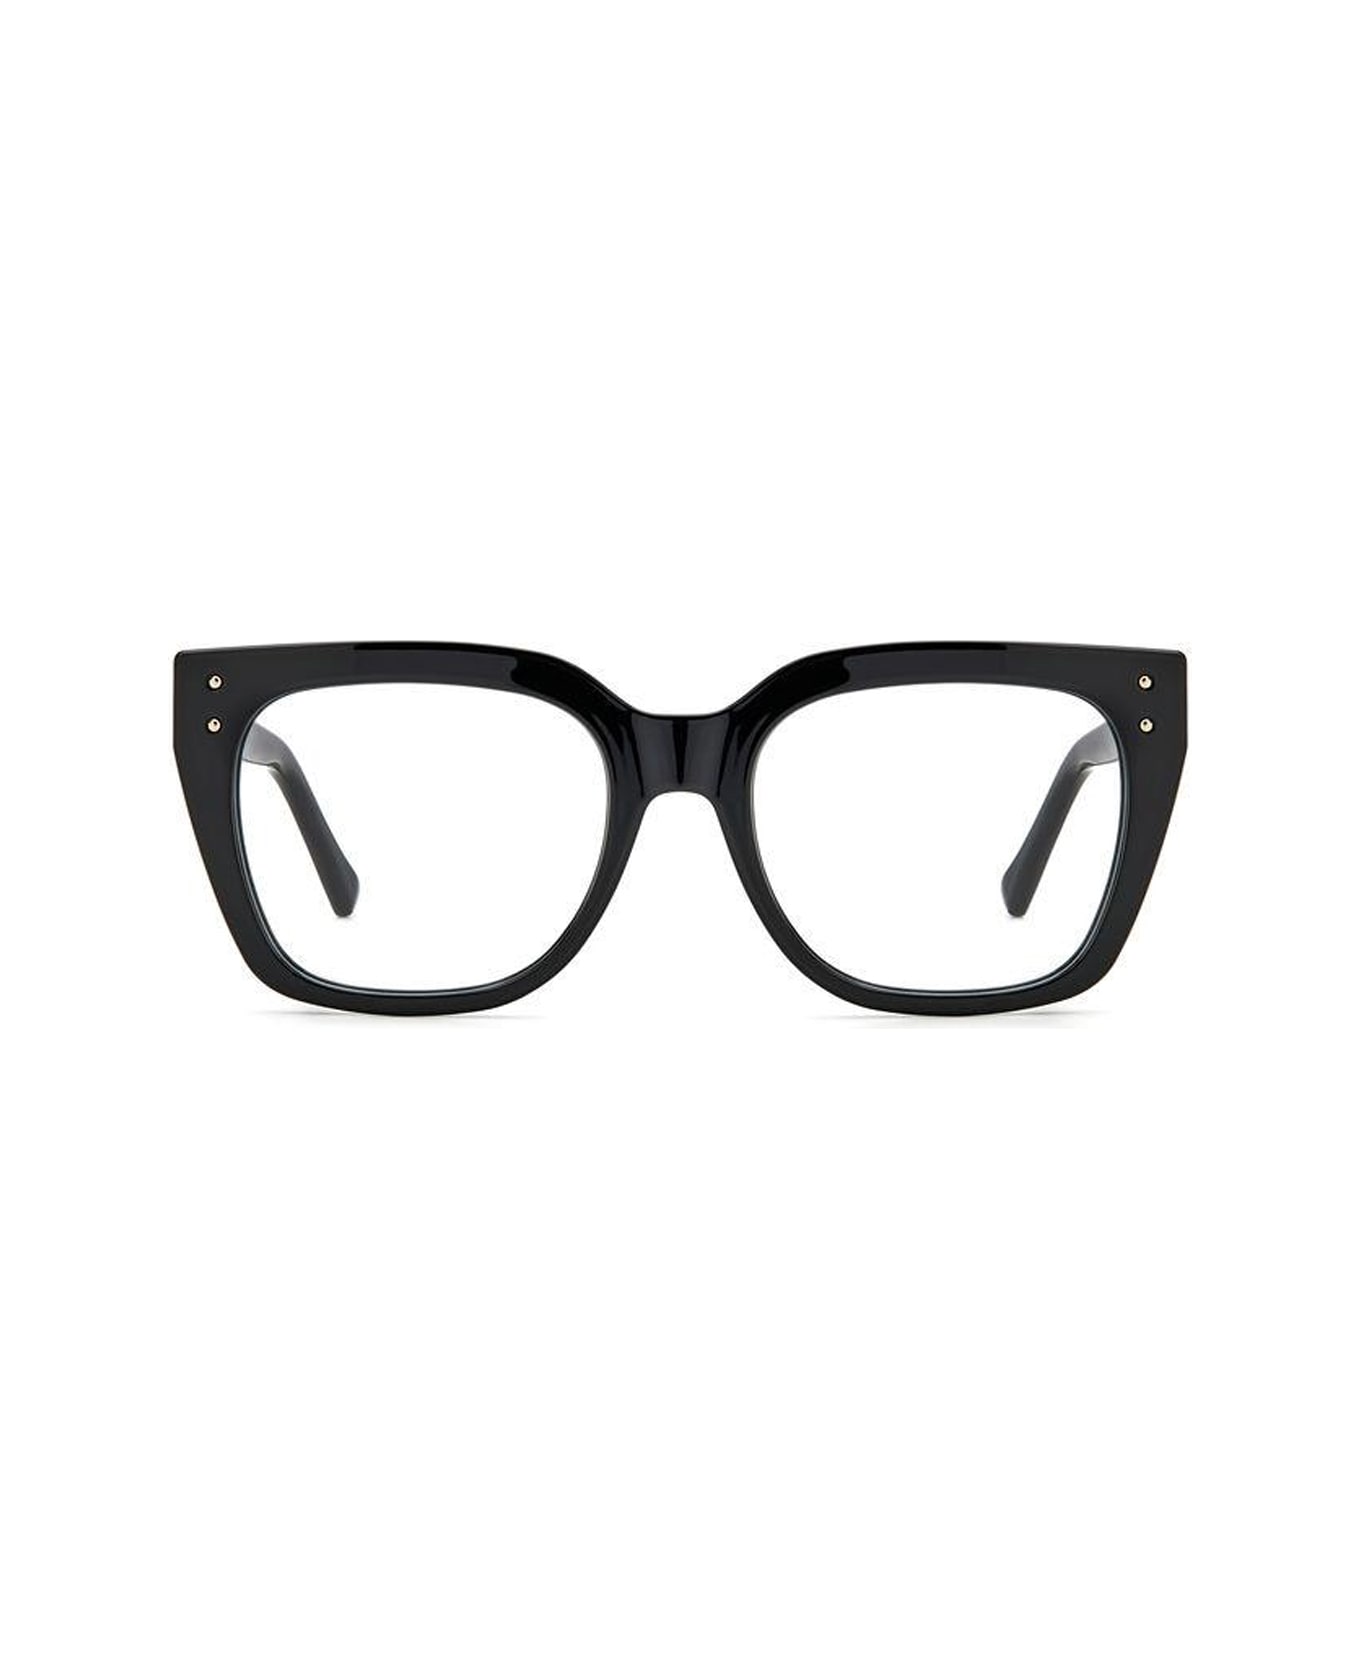 Jimmy Choo Eyewear Jc329 807/19 Black Glasses - Nero